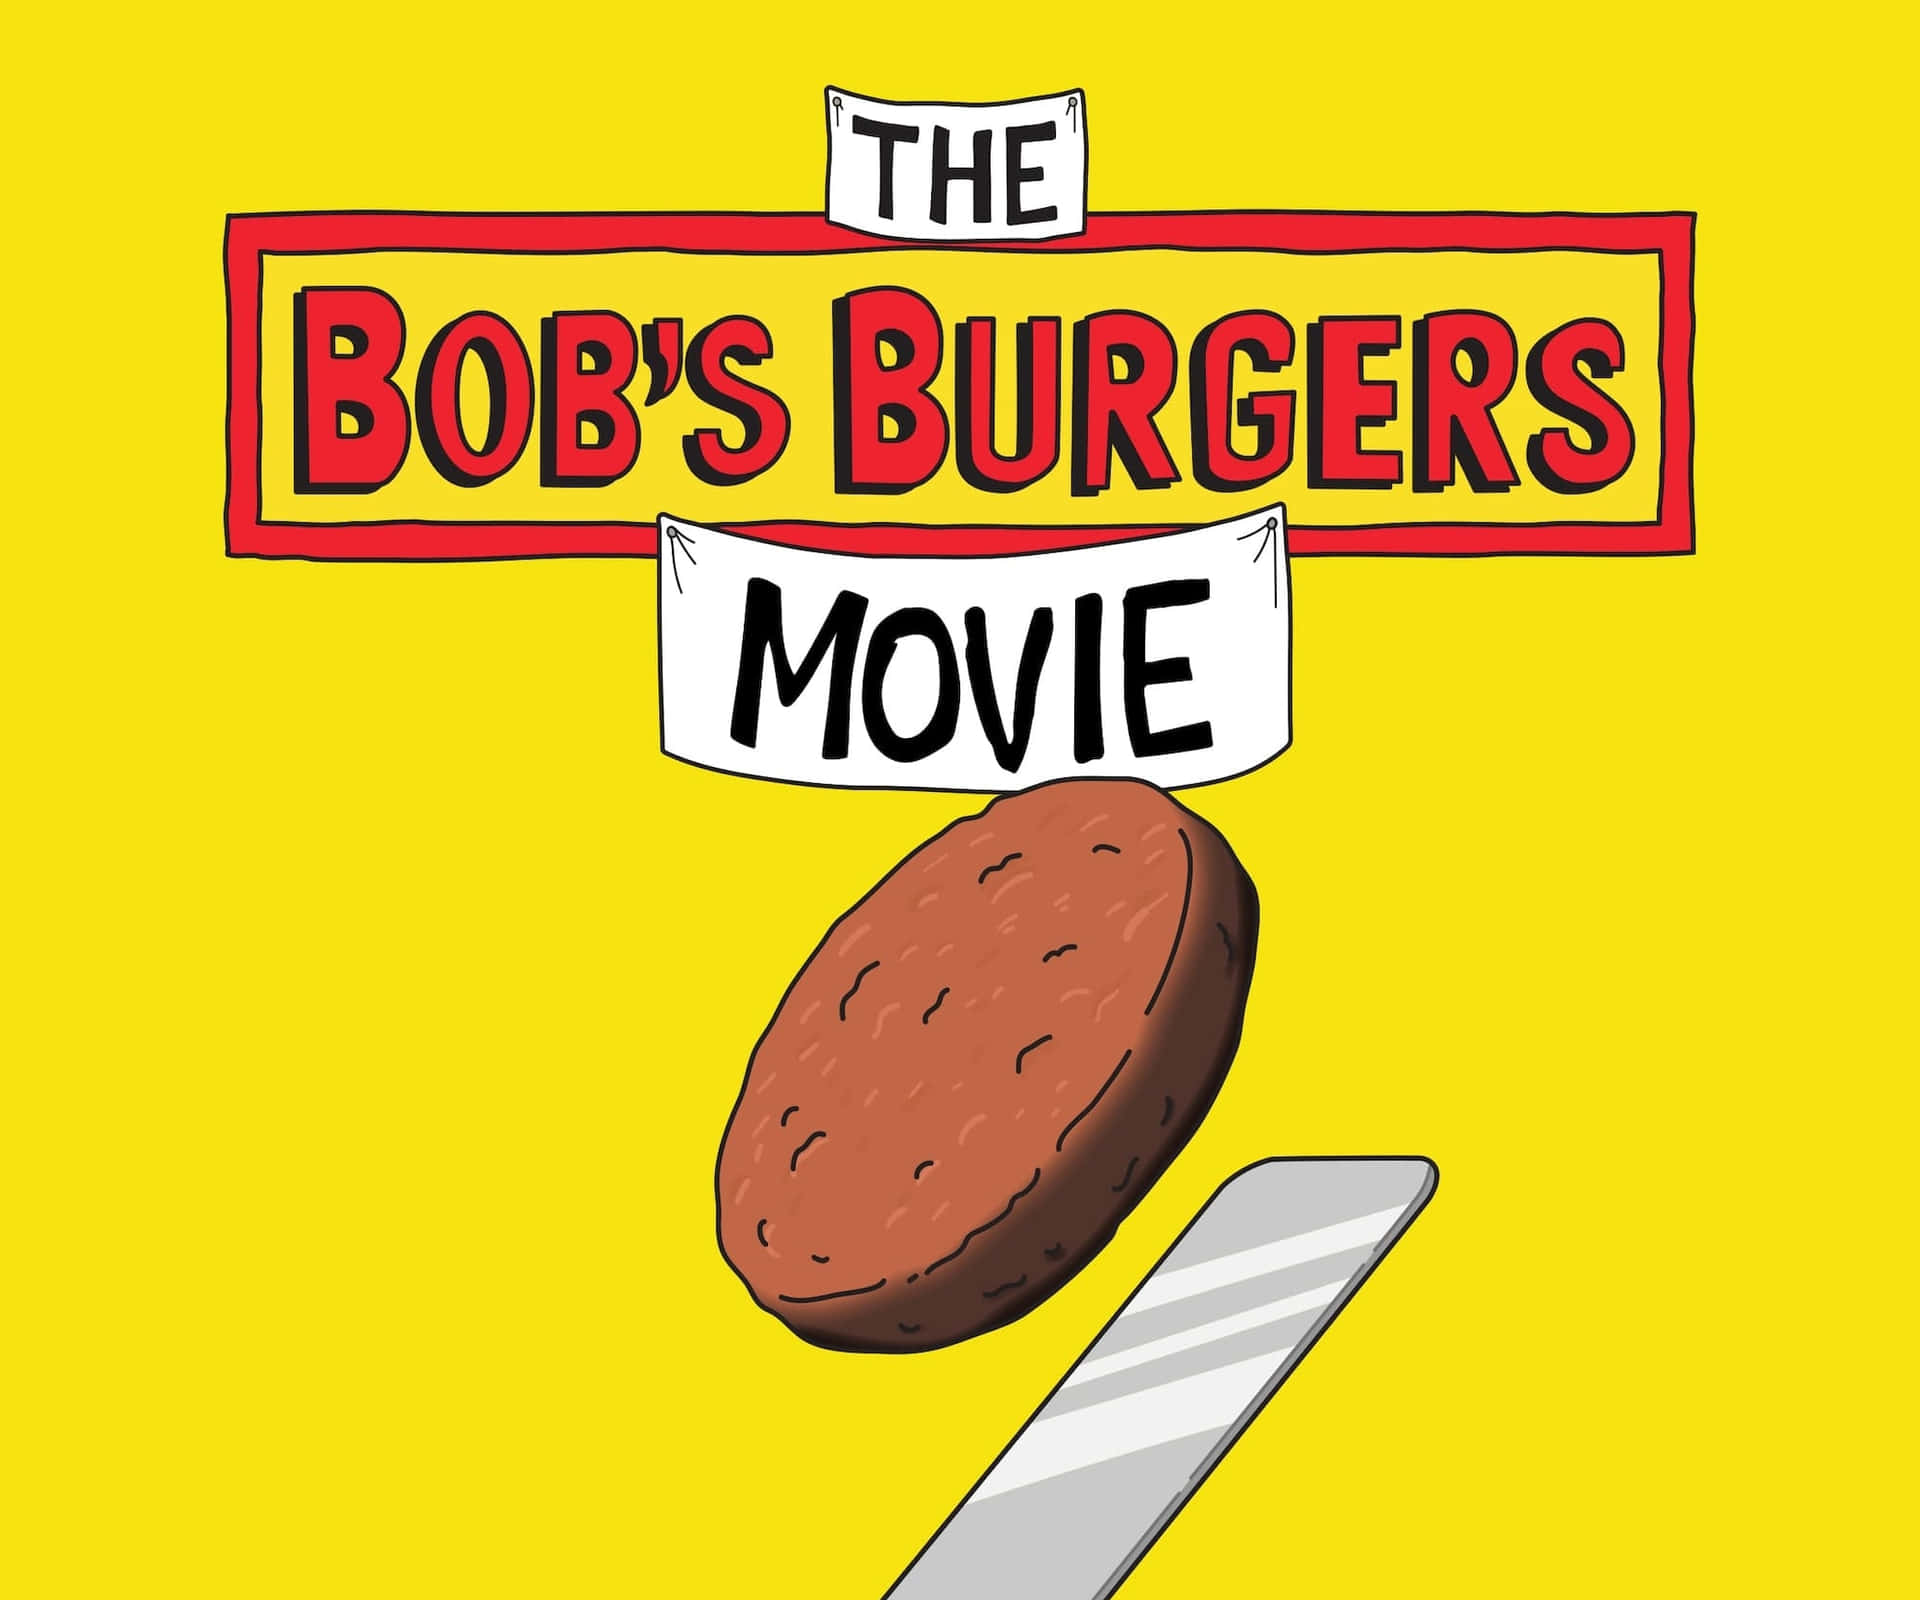 Bob's Burgers Movie Poster Background